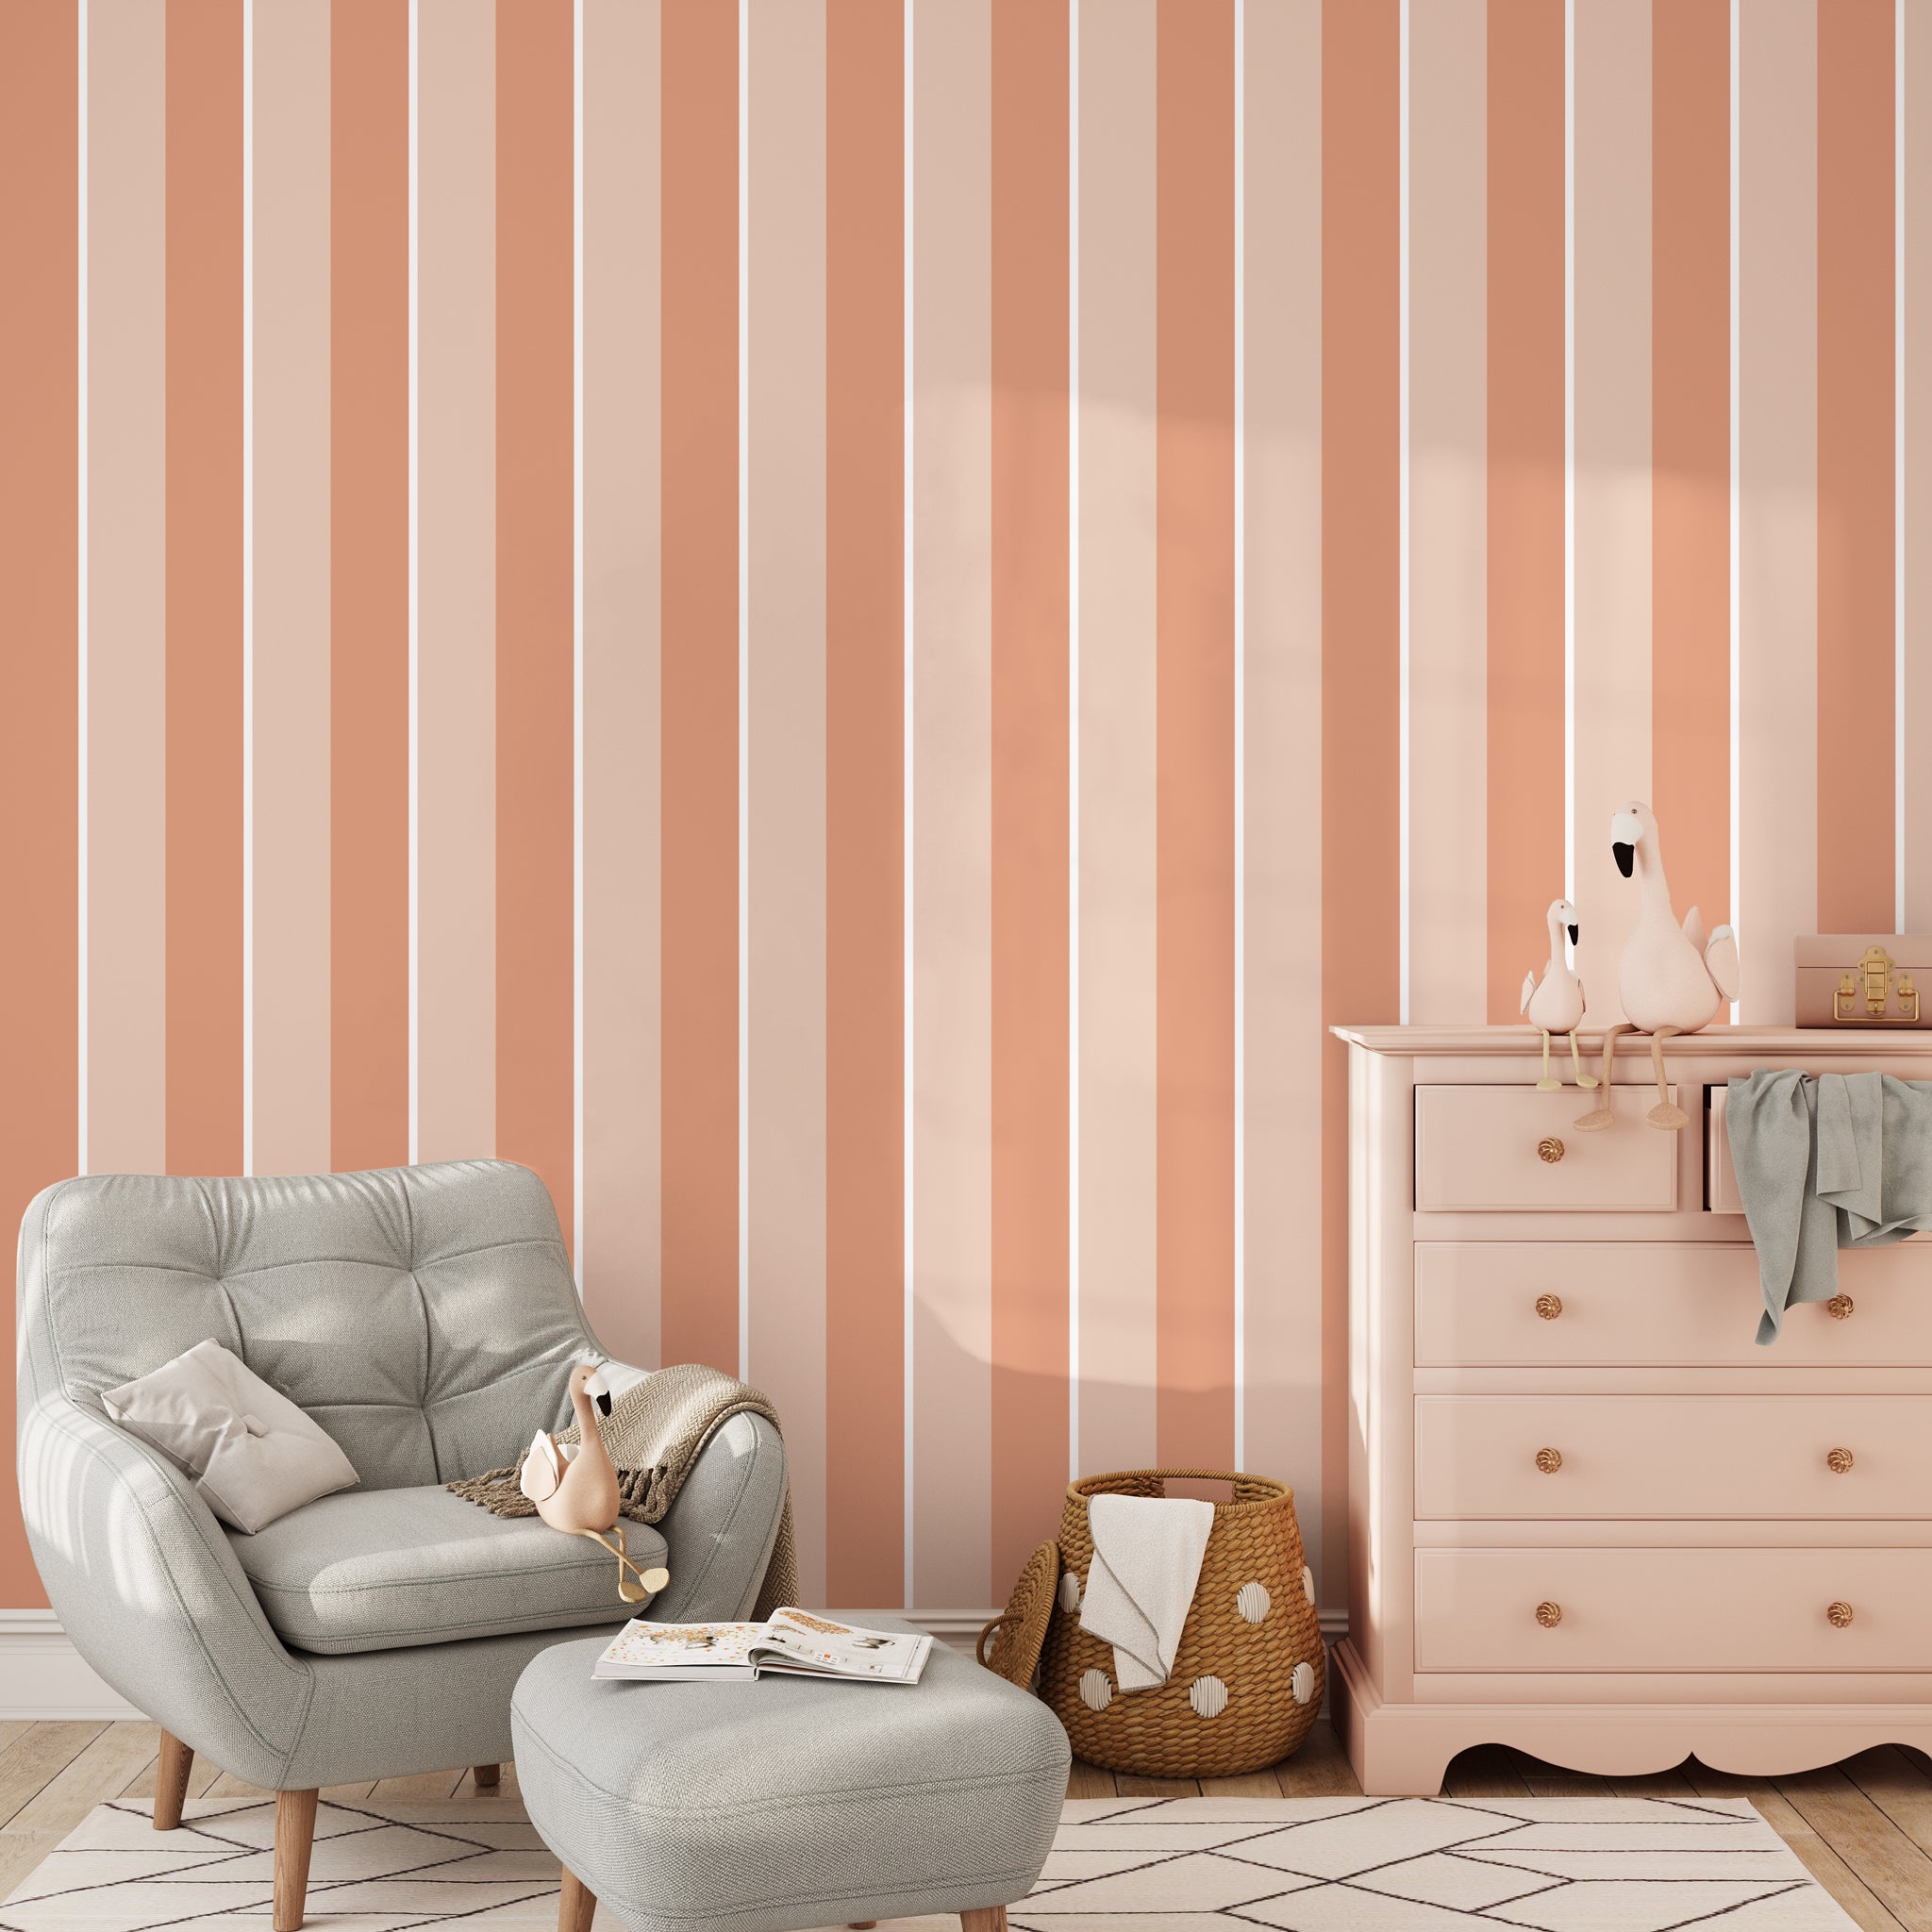 "Life's A Peach Wallpaper by Wall Blush showcased in a stylish modern living room, emphasizing elegant wall decor."